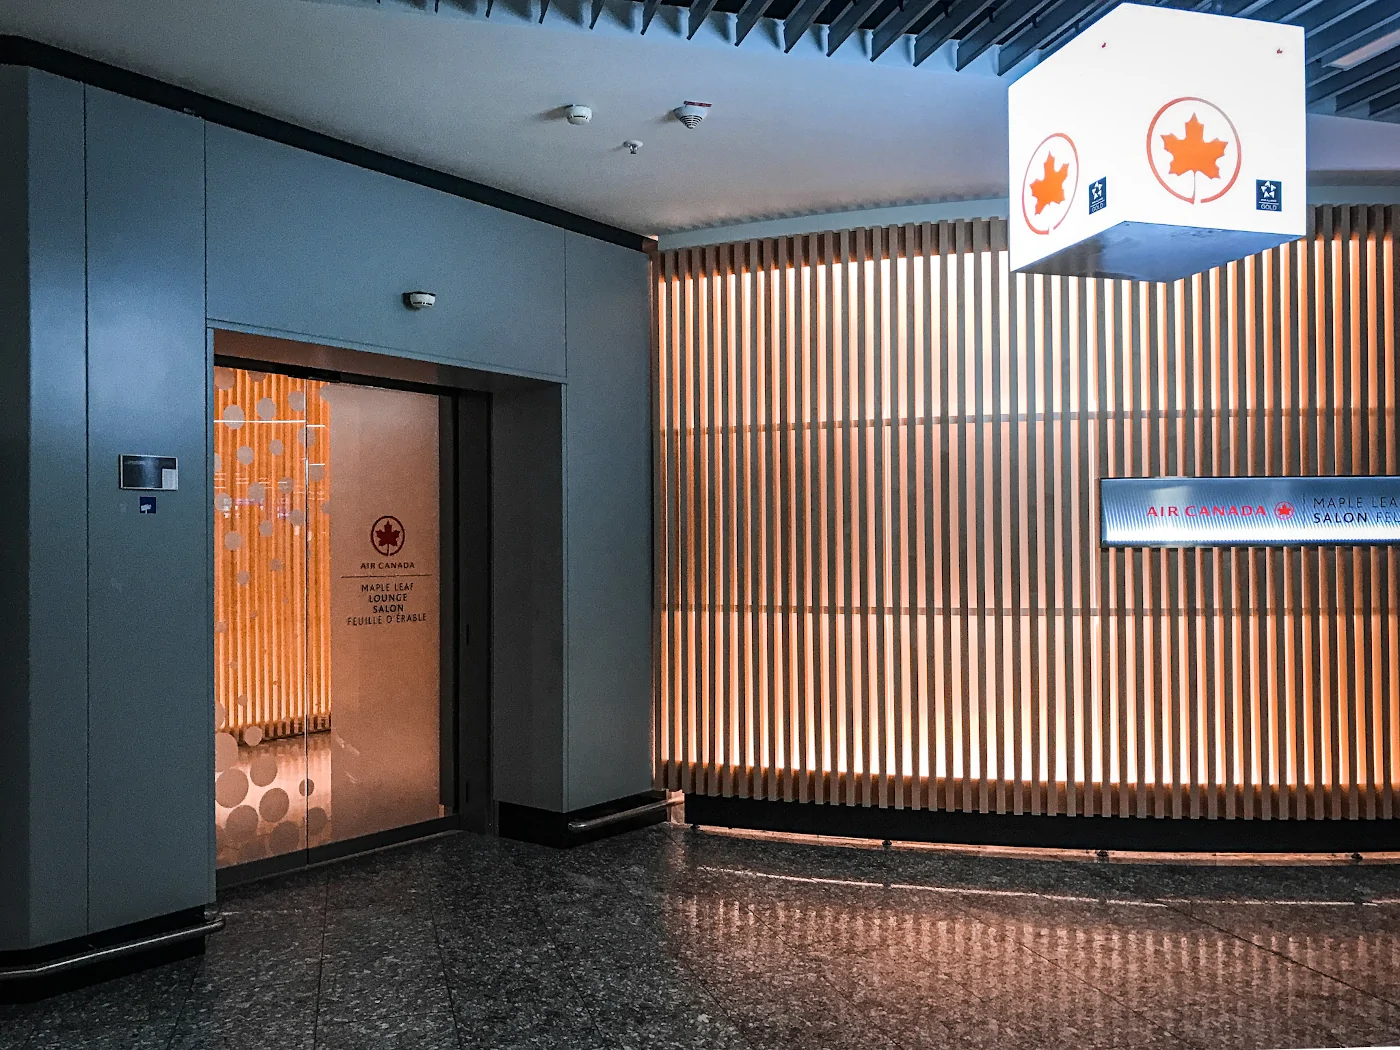 Eingang der Air Canada Maple leaf Lounge Frankfurt Terminal 1B